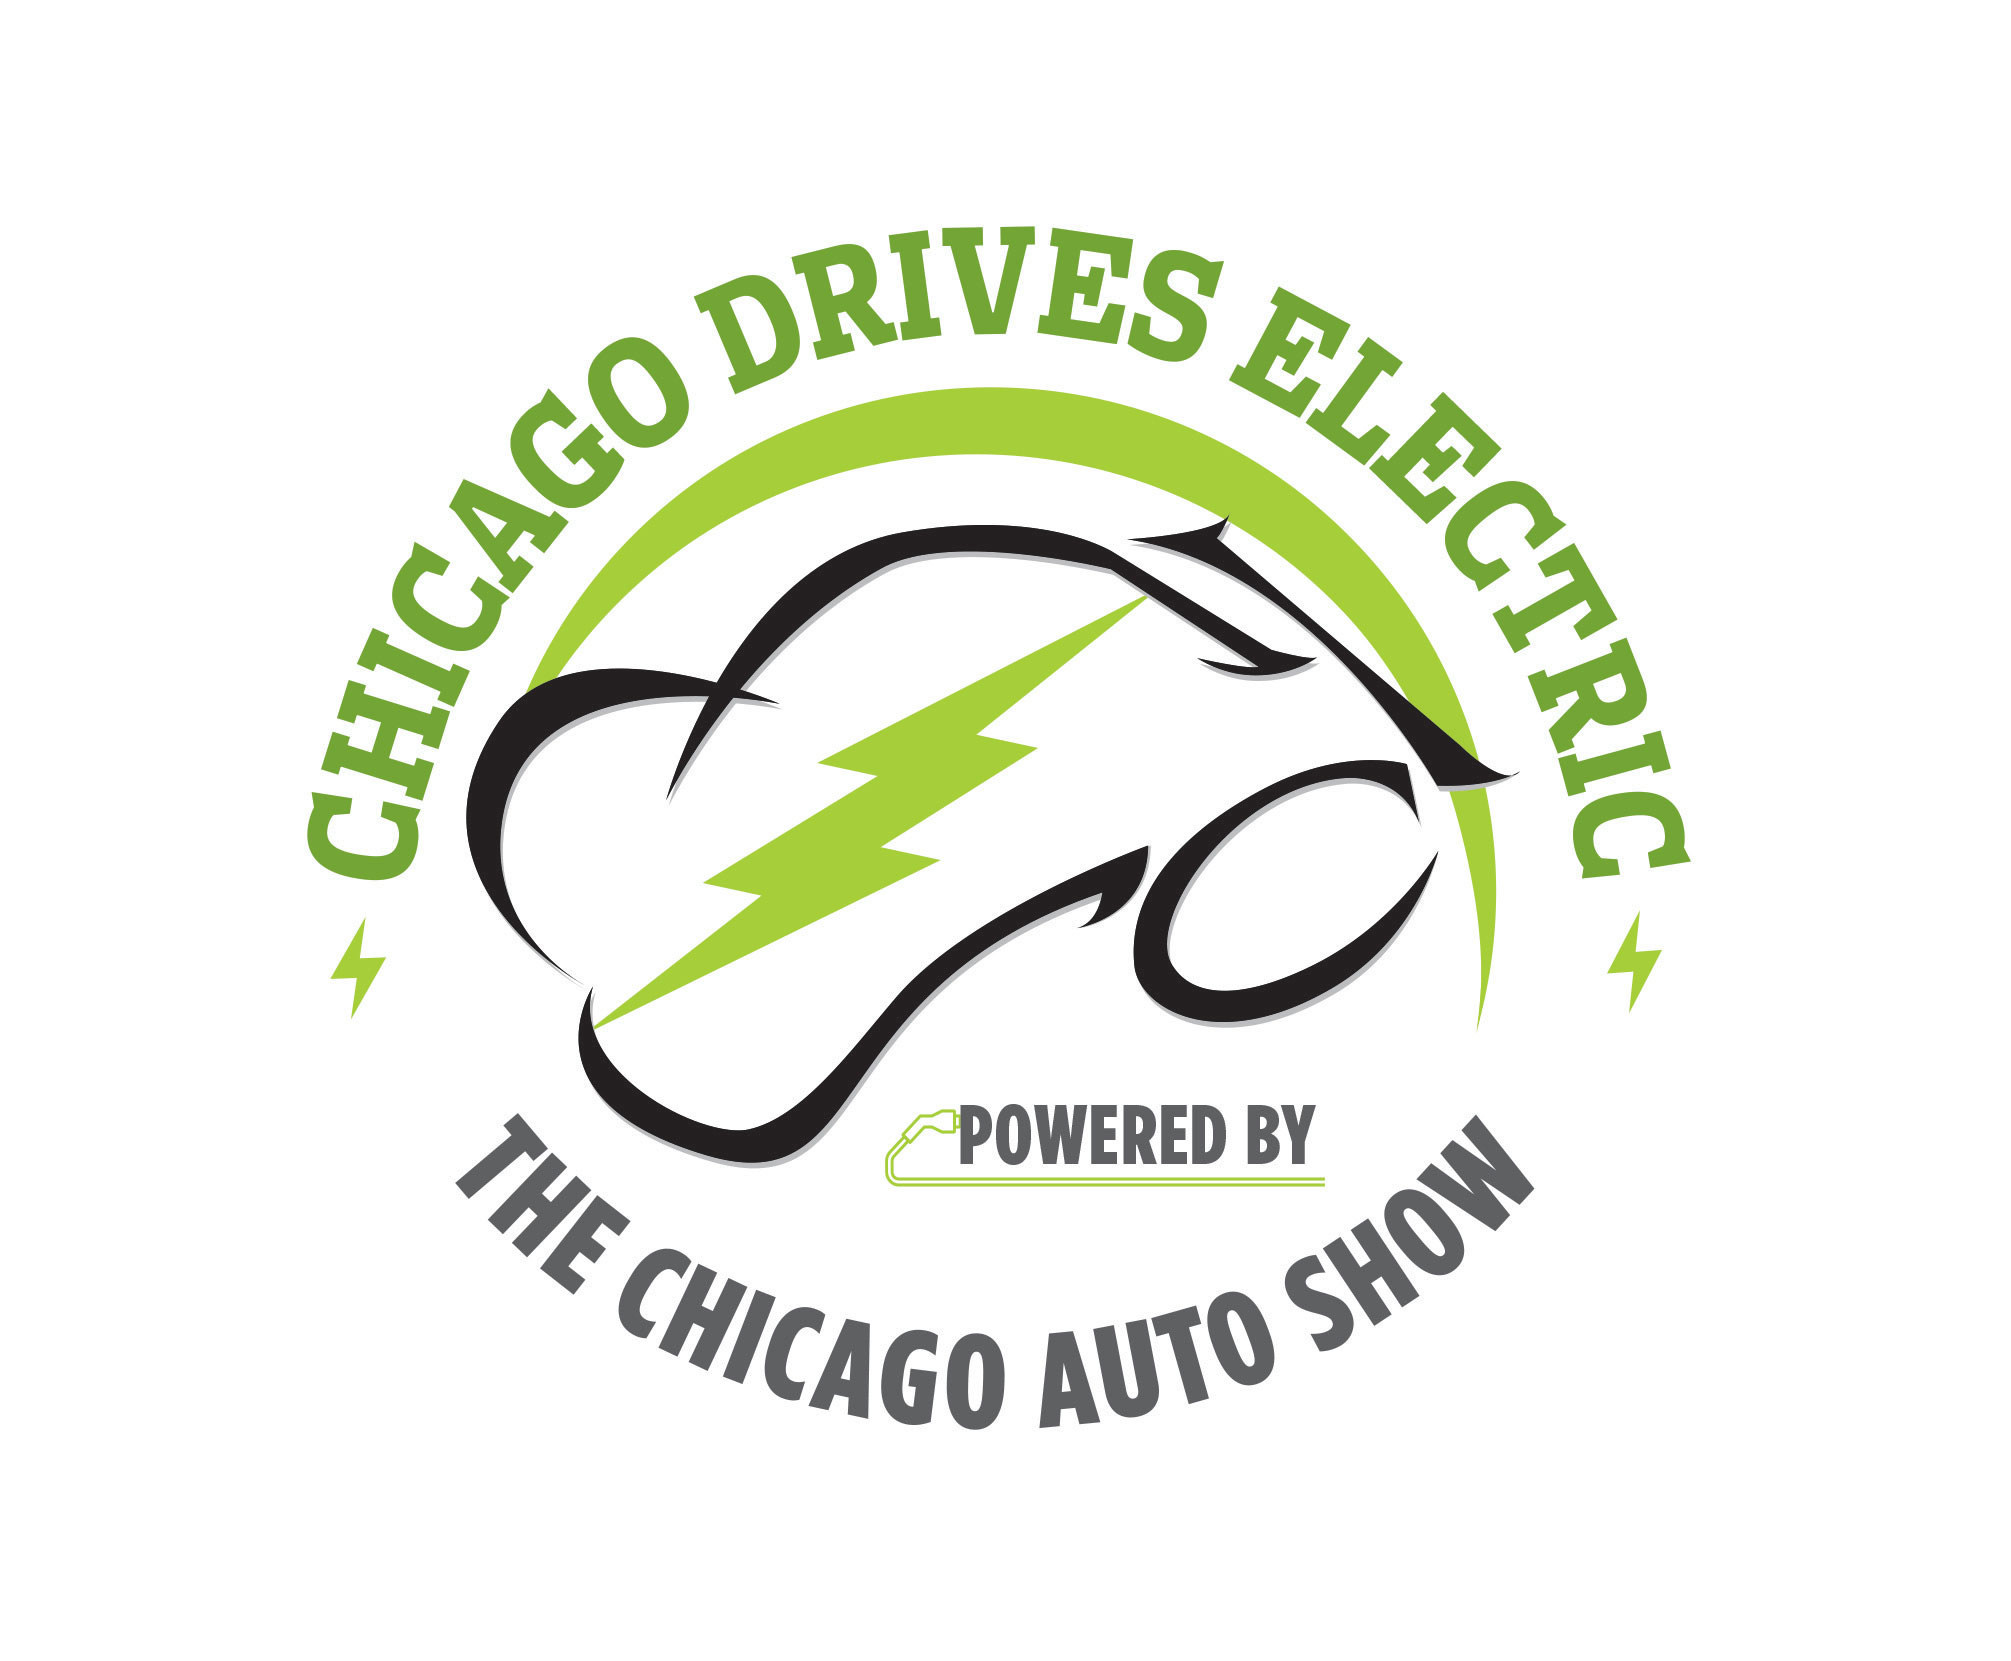 CHICAGO AUTOMOBILE TRADE ASSOCIATION'S "CHICAGO DRIVES ELECTRIC" EV